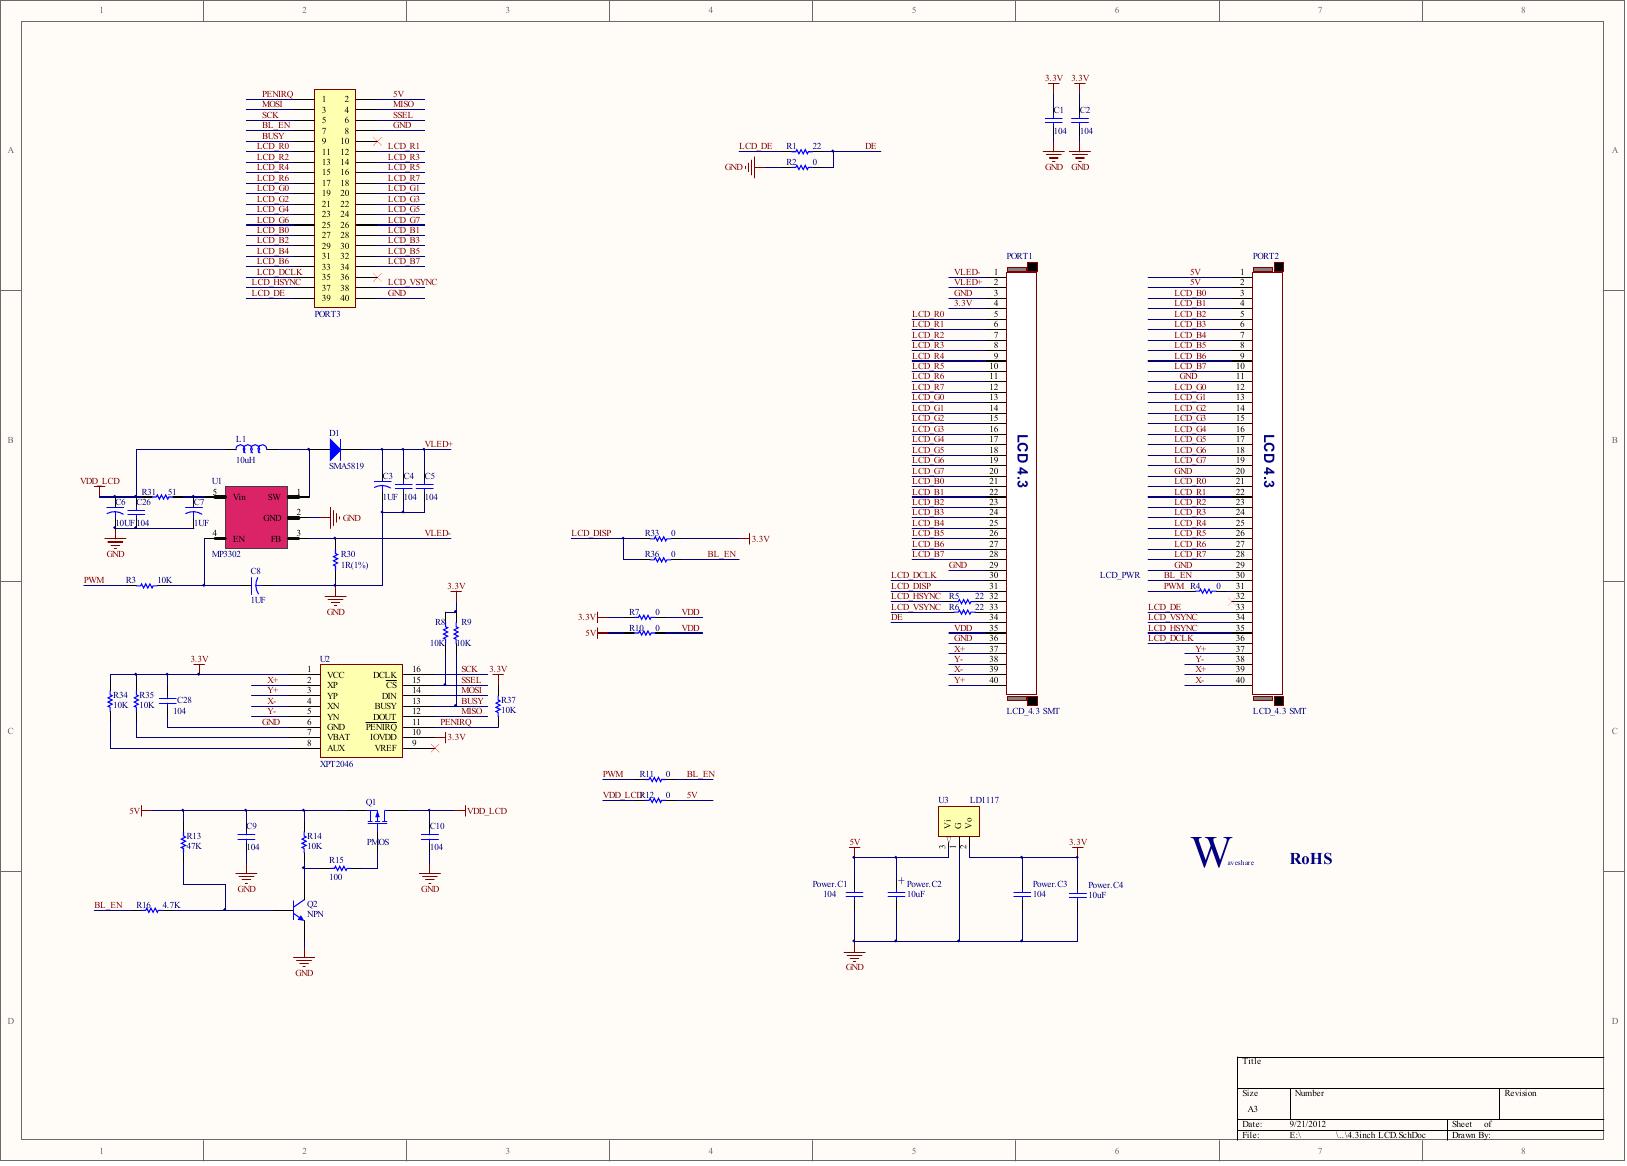 原理图(4.3inch-480x272-Touch-LCD-A_schematic).pdf